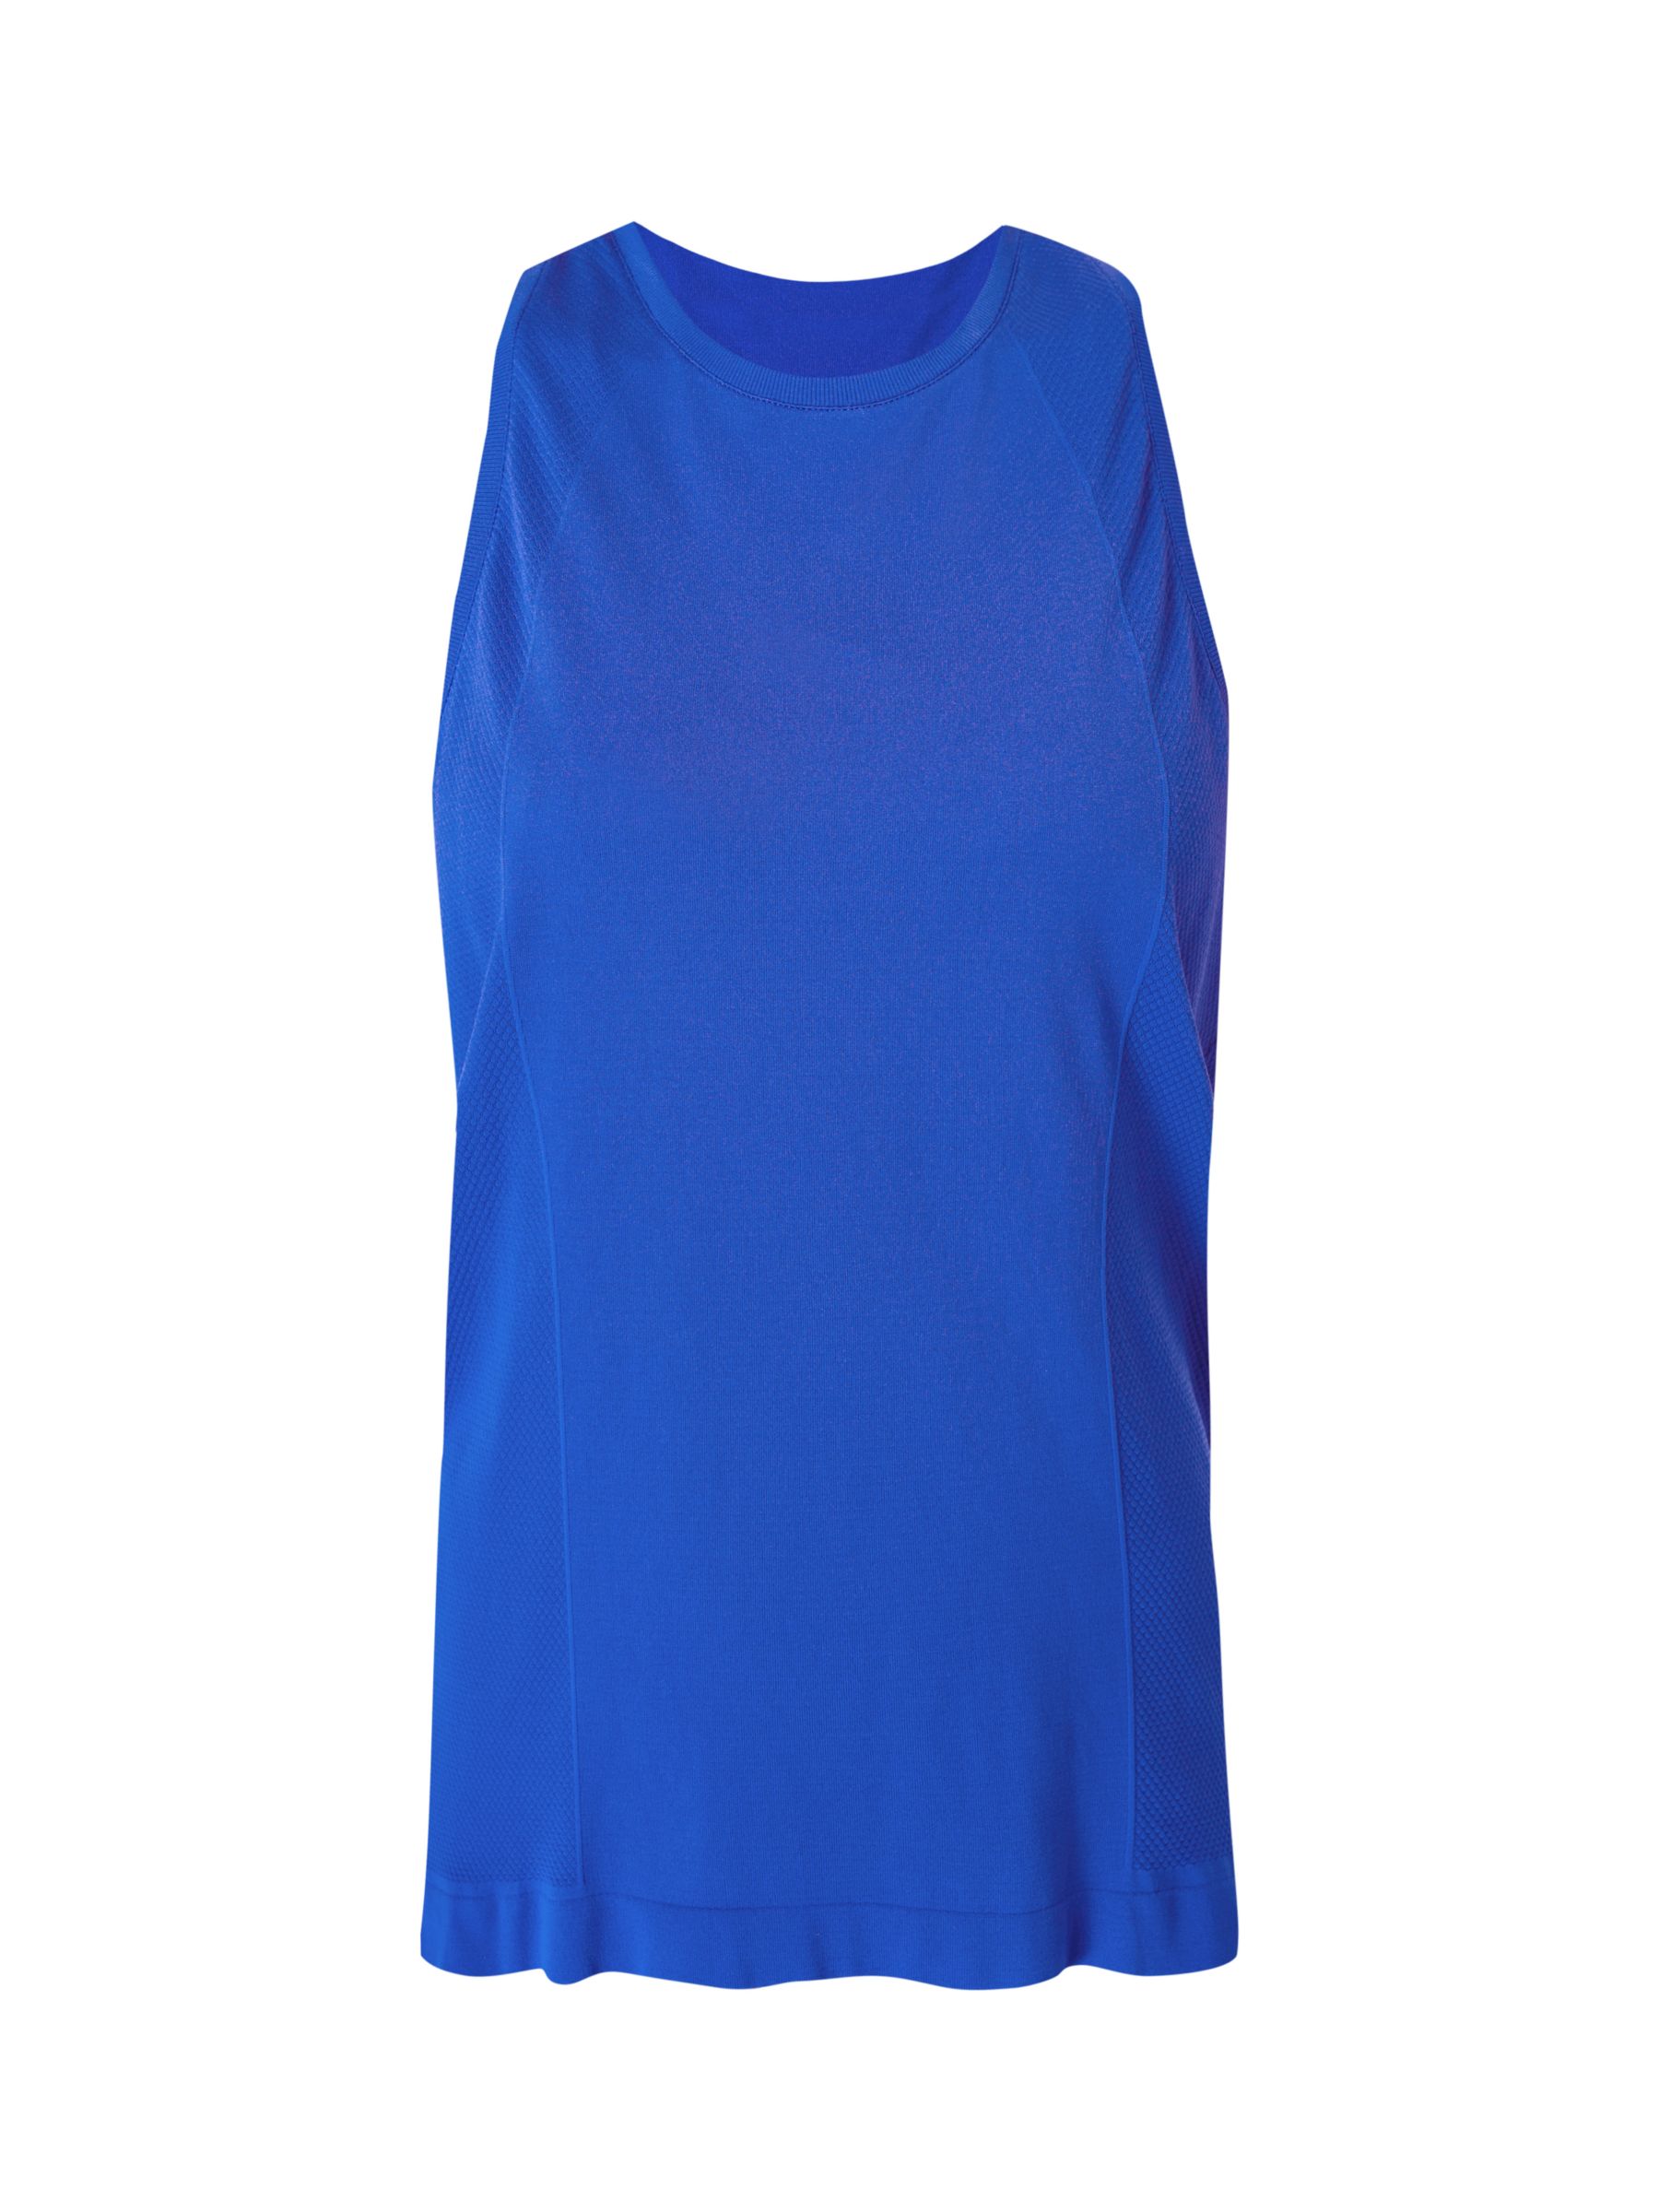 Sweaty Betty Athlete Seamless Gym Vest, Navy Blue at John Lewis & Partners